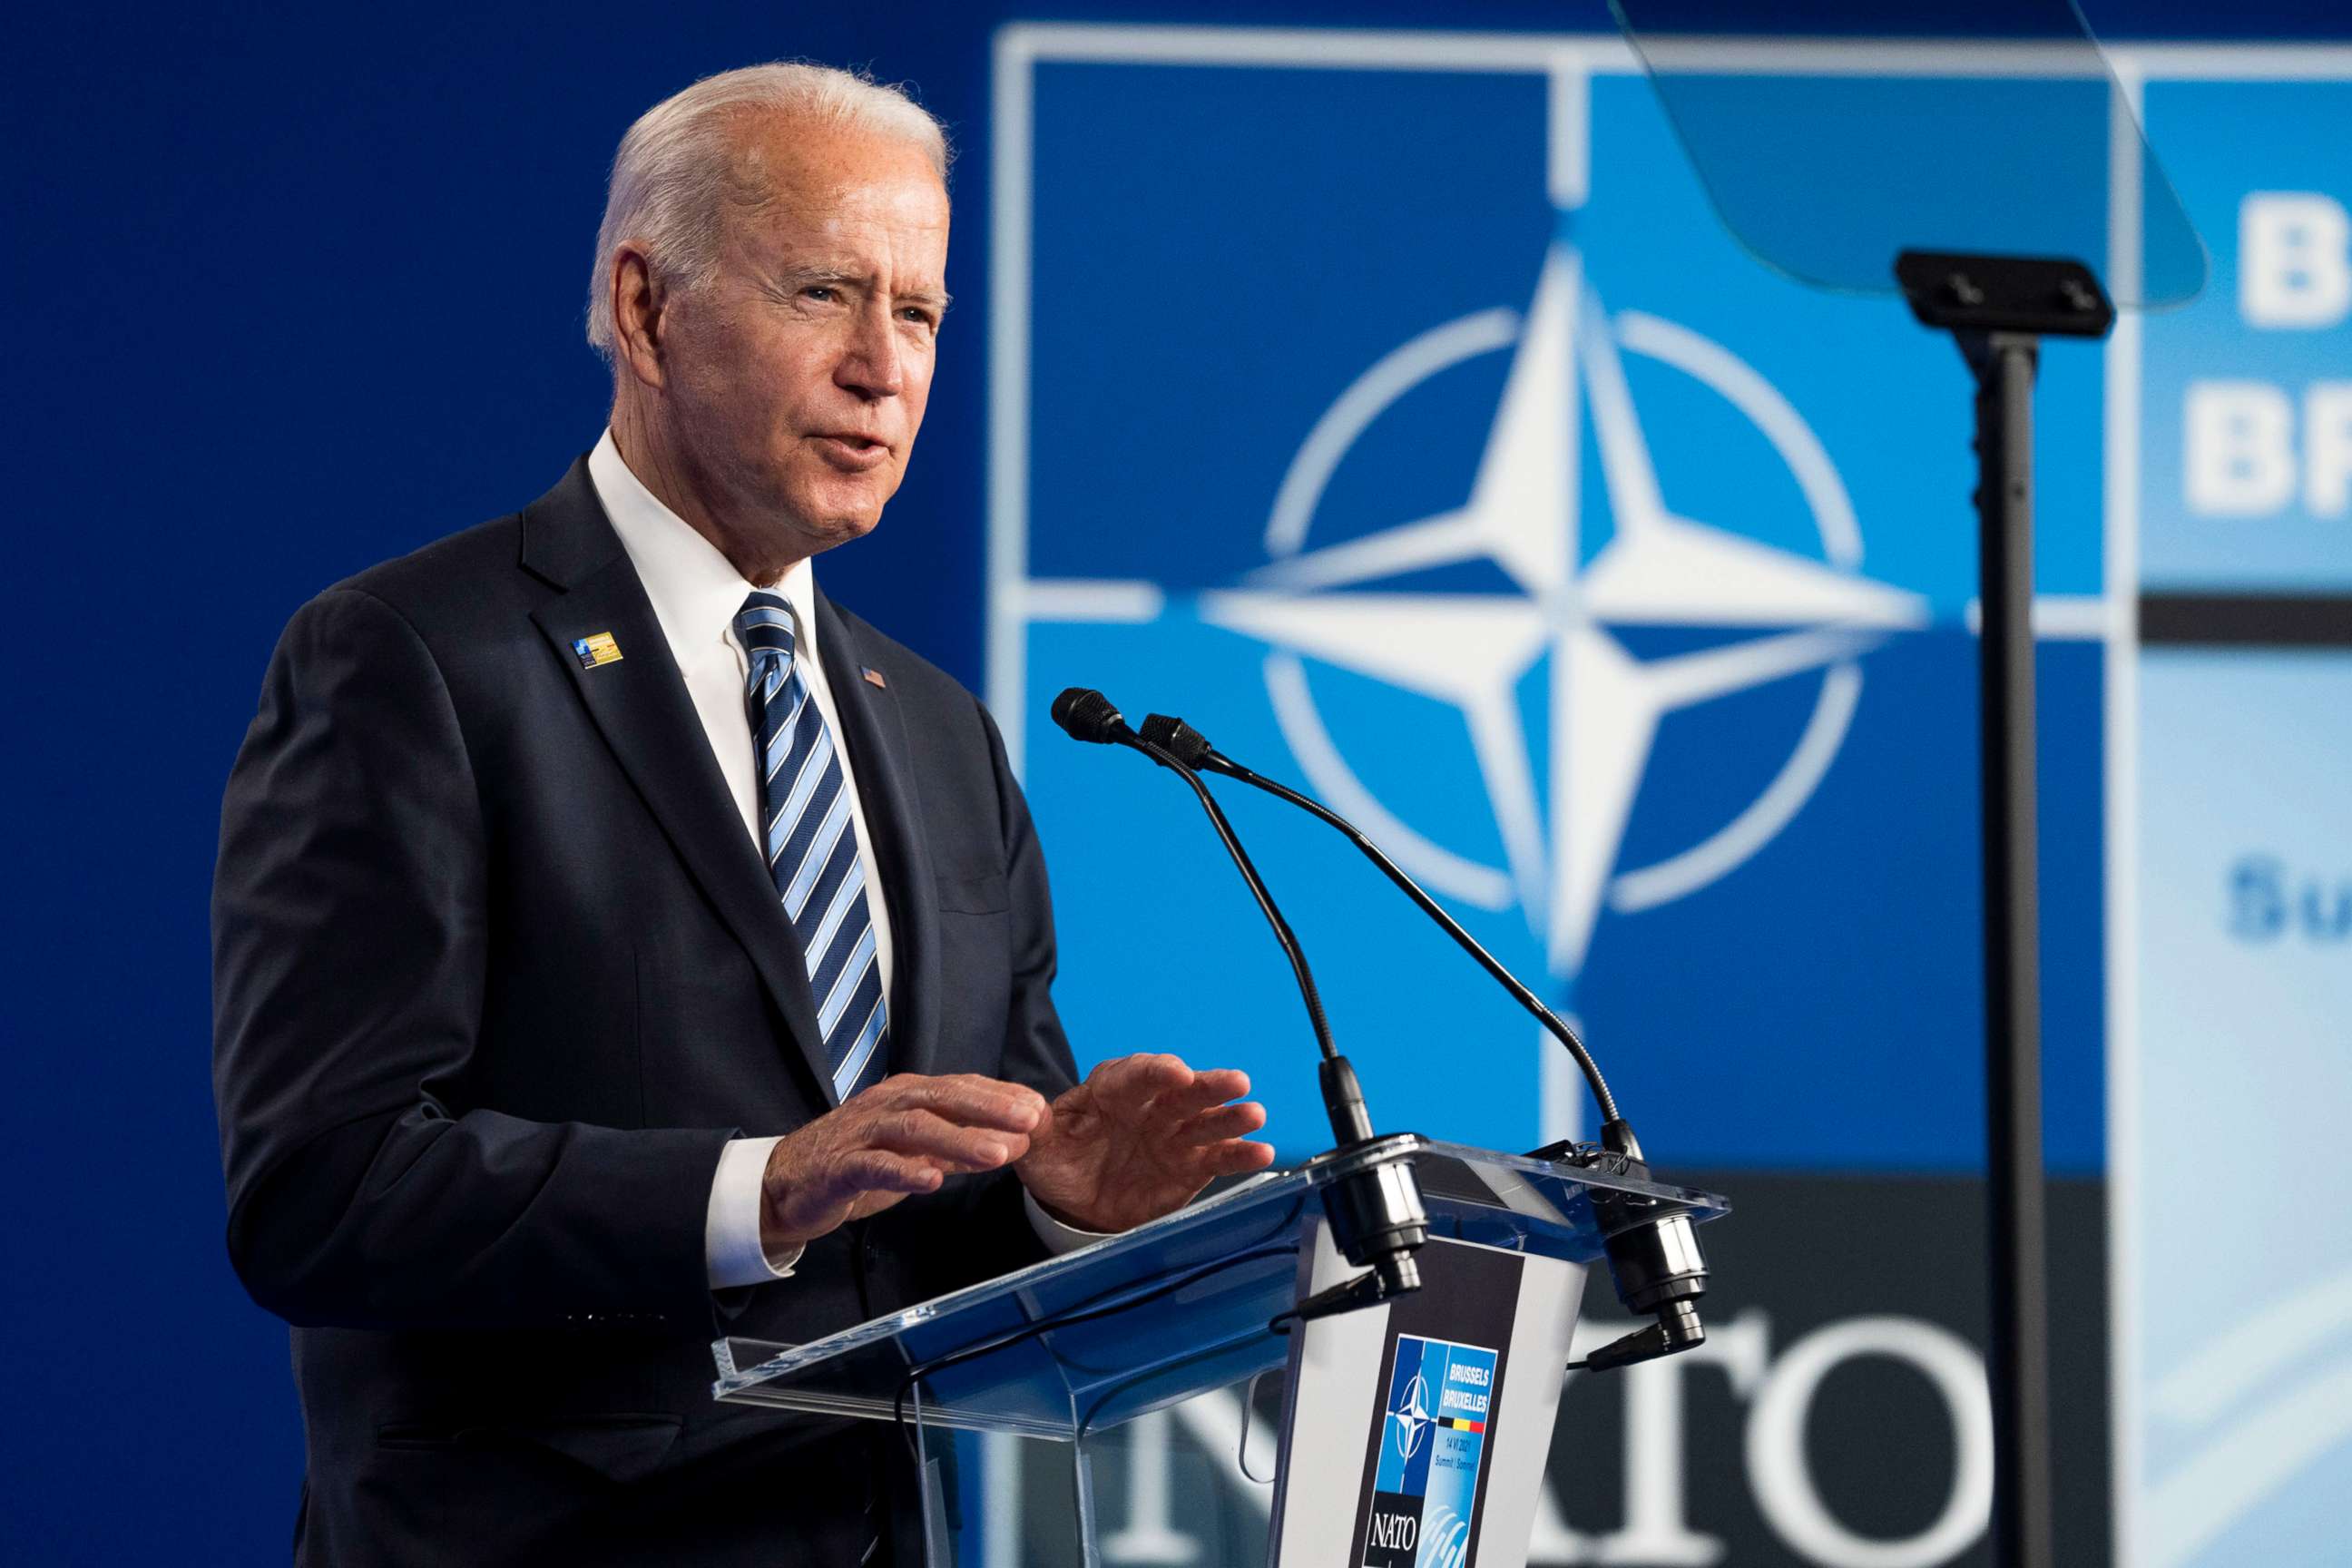 PHOTO: President Joe Biden speaks at NATO headquarters in Brussels on June 14, 2021.